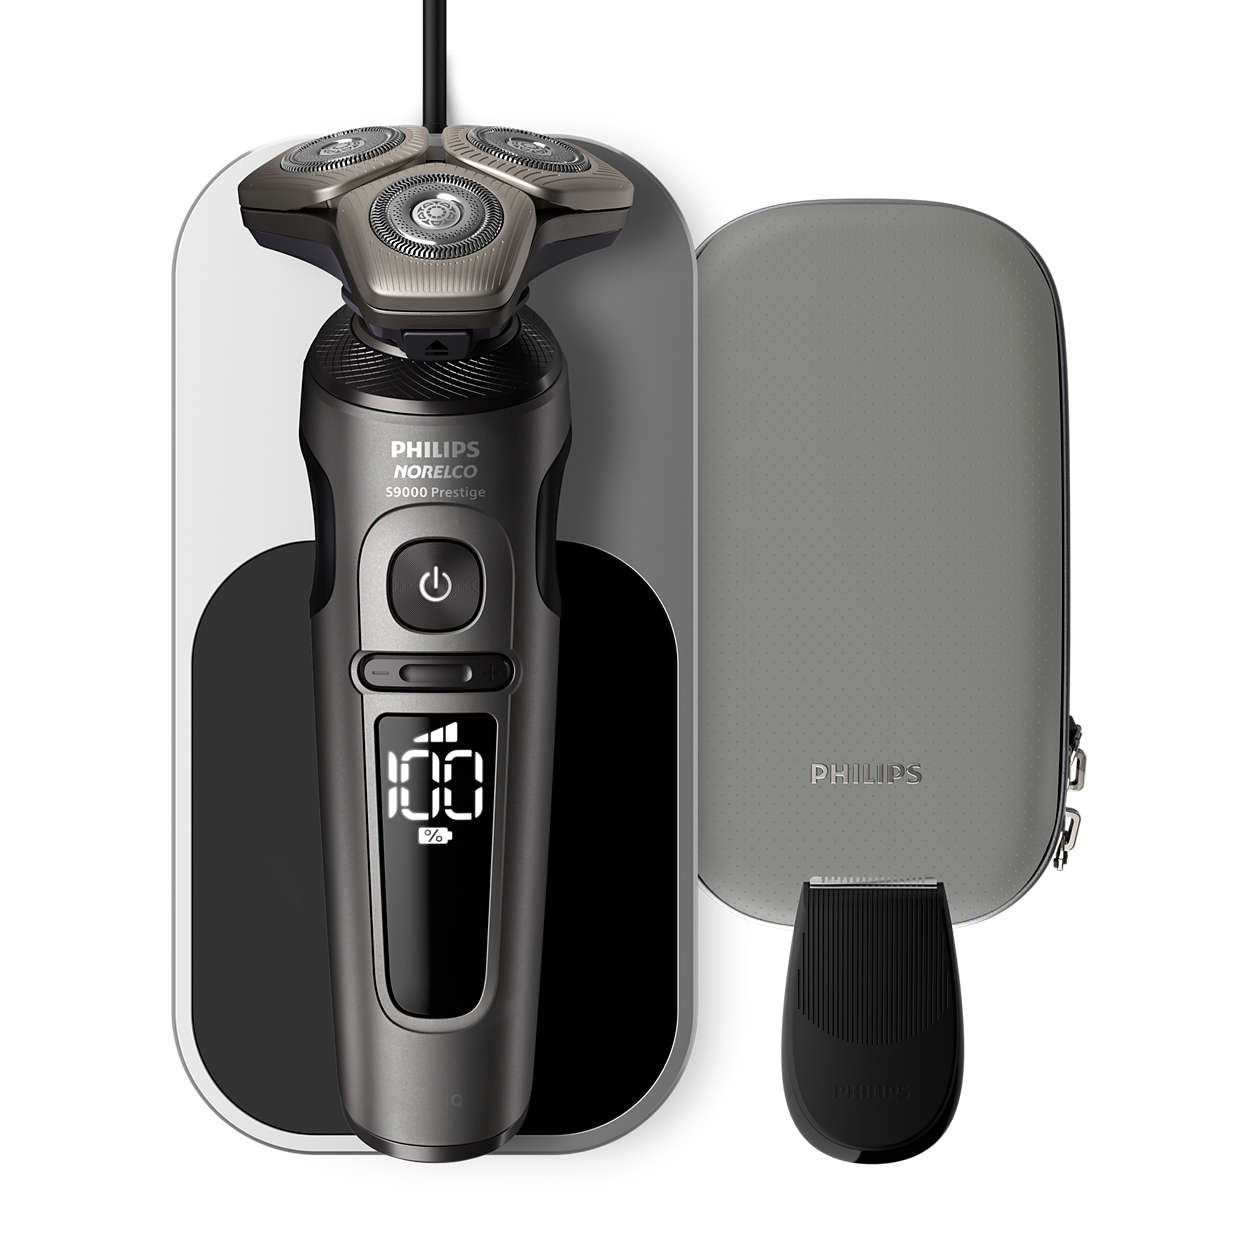 Shaver S9000 Prestige Wet & dry electric shaver, Series 9000 